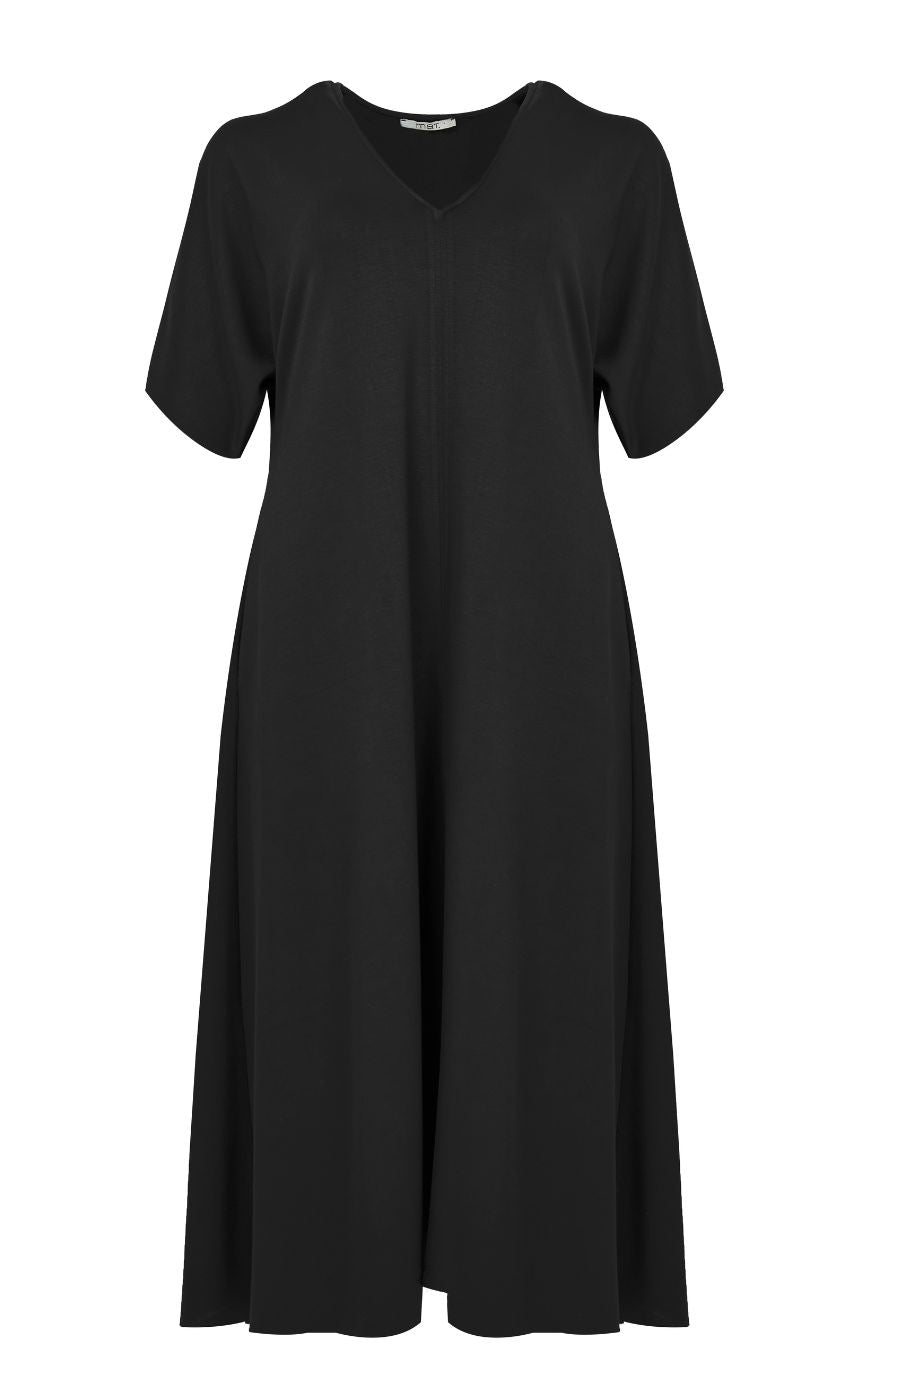 Mat Modal Dress in Black